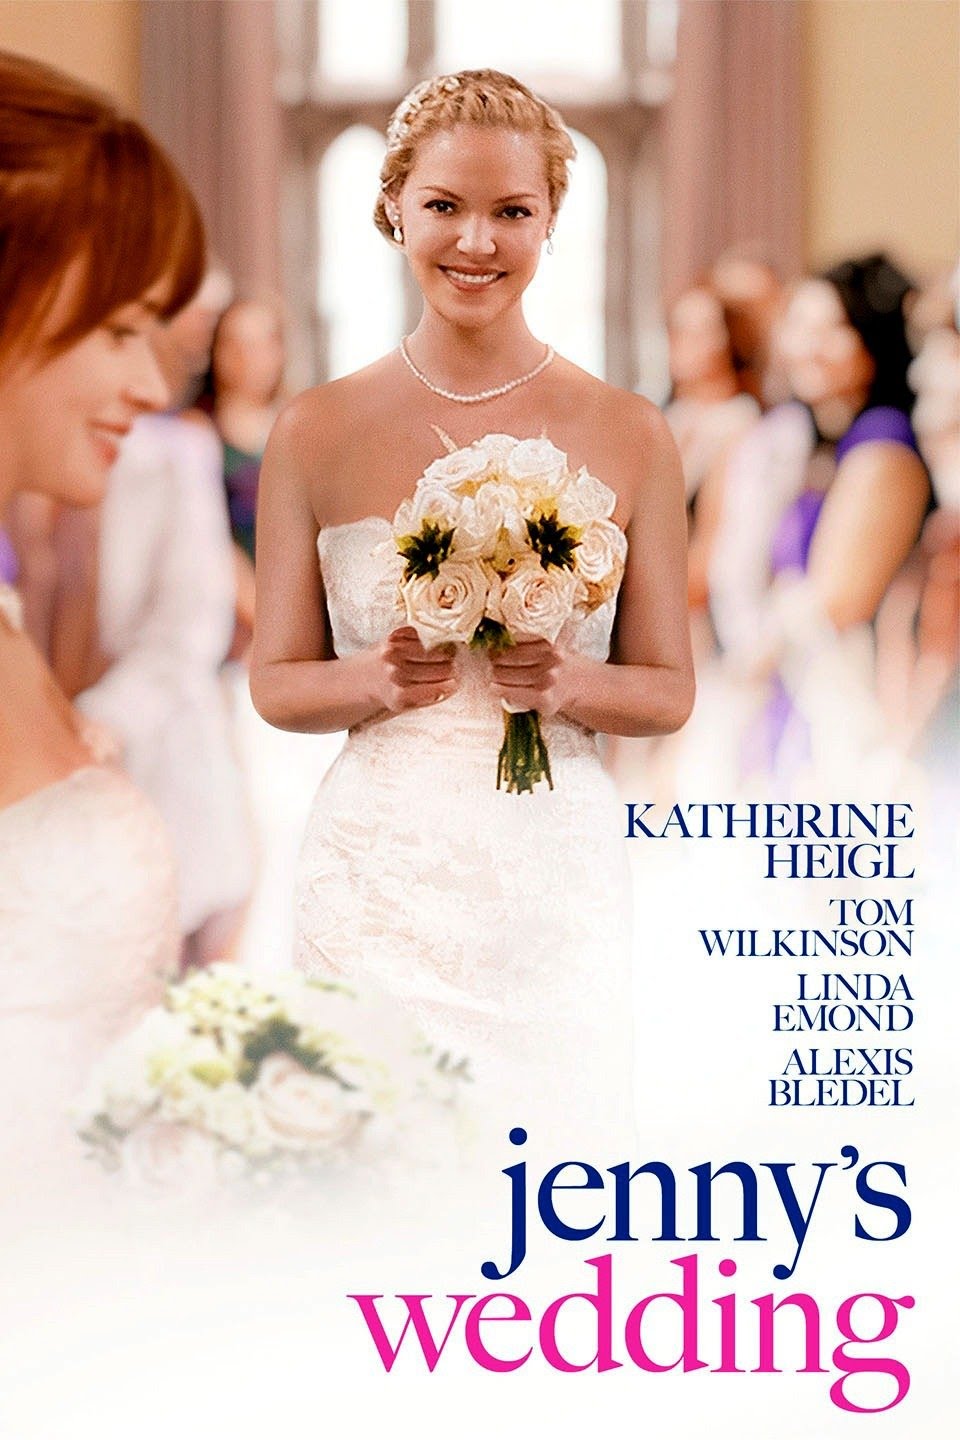 Jenny’s Wedding [HD] (2015)